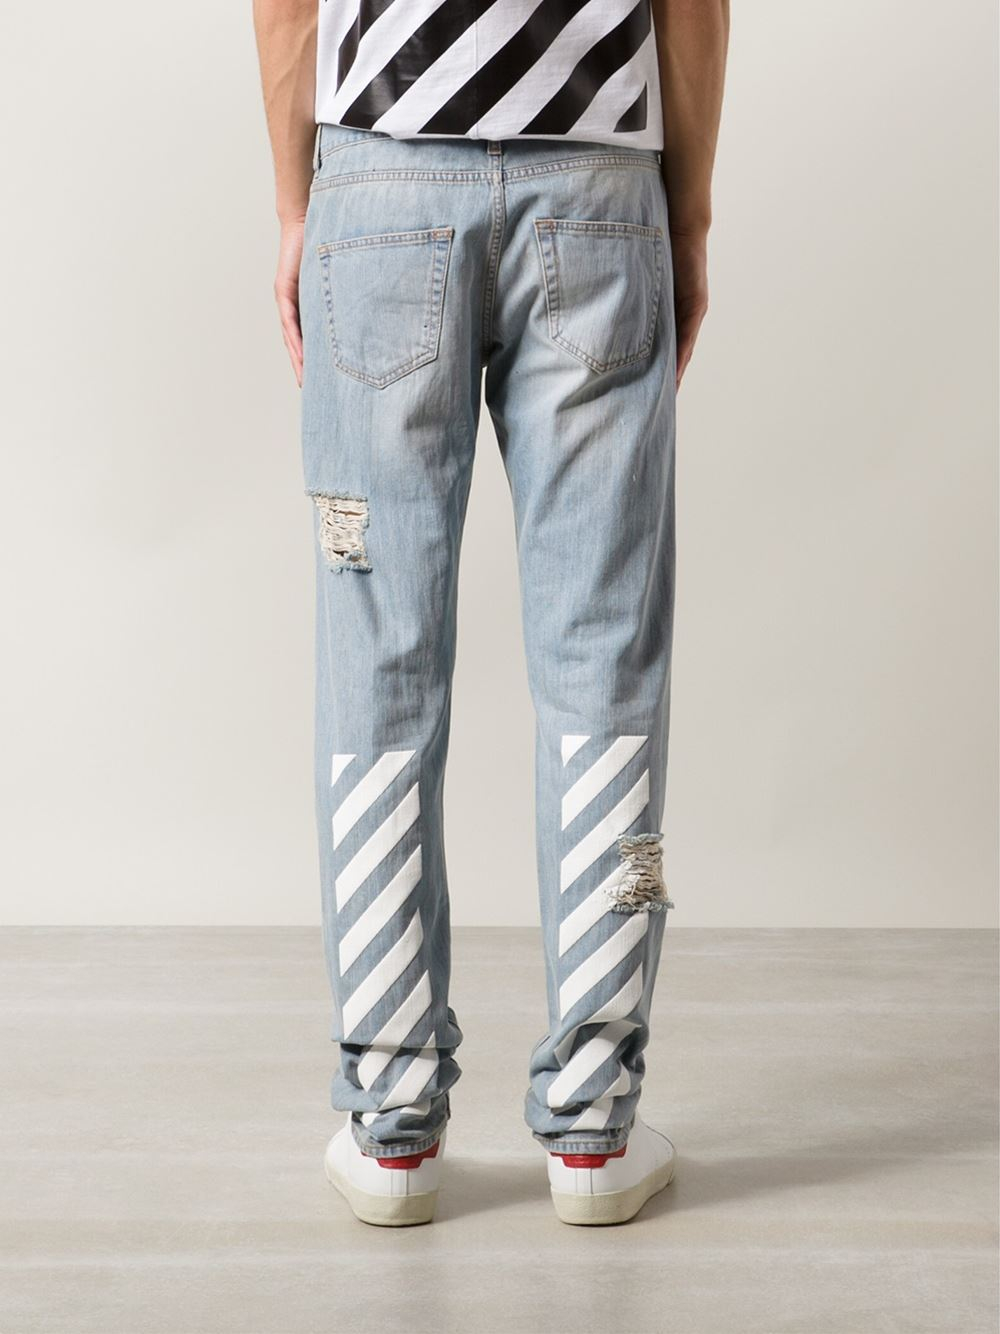 Details 75+ off white pants jeans - in.eteachers